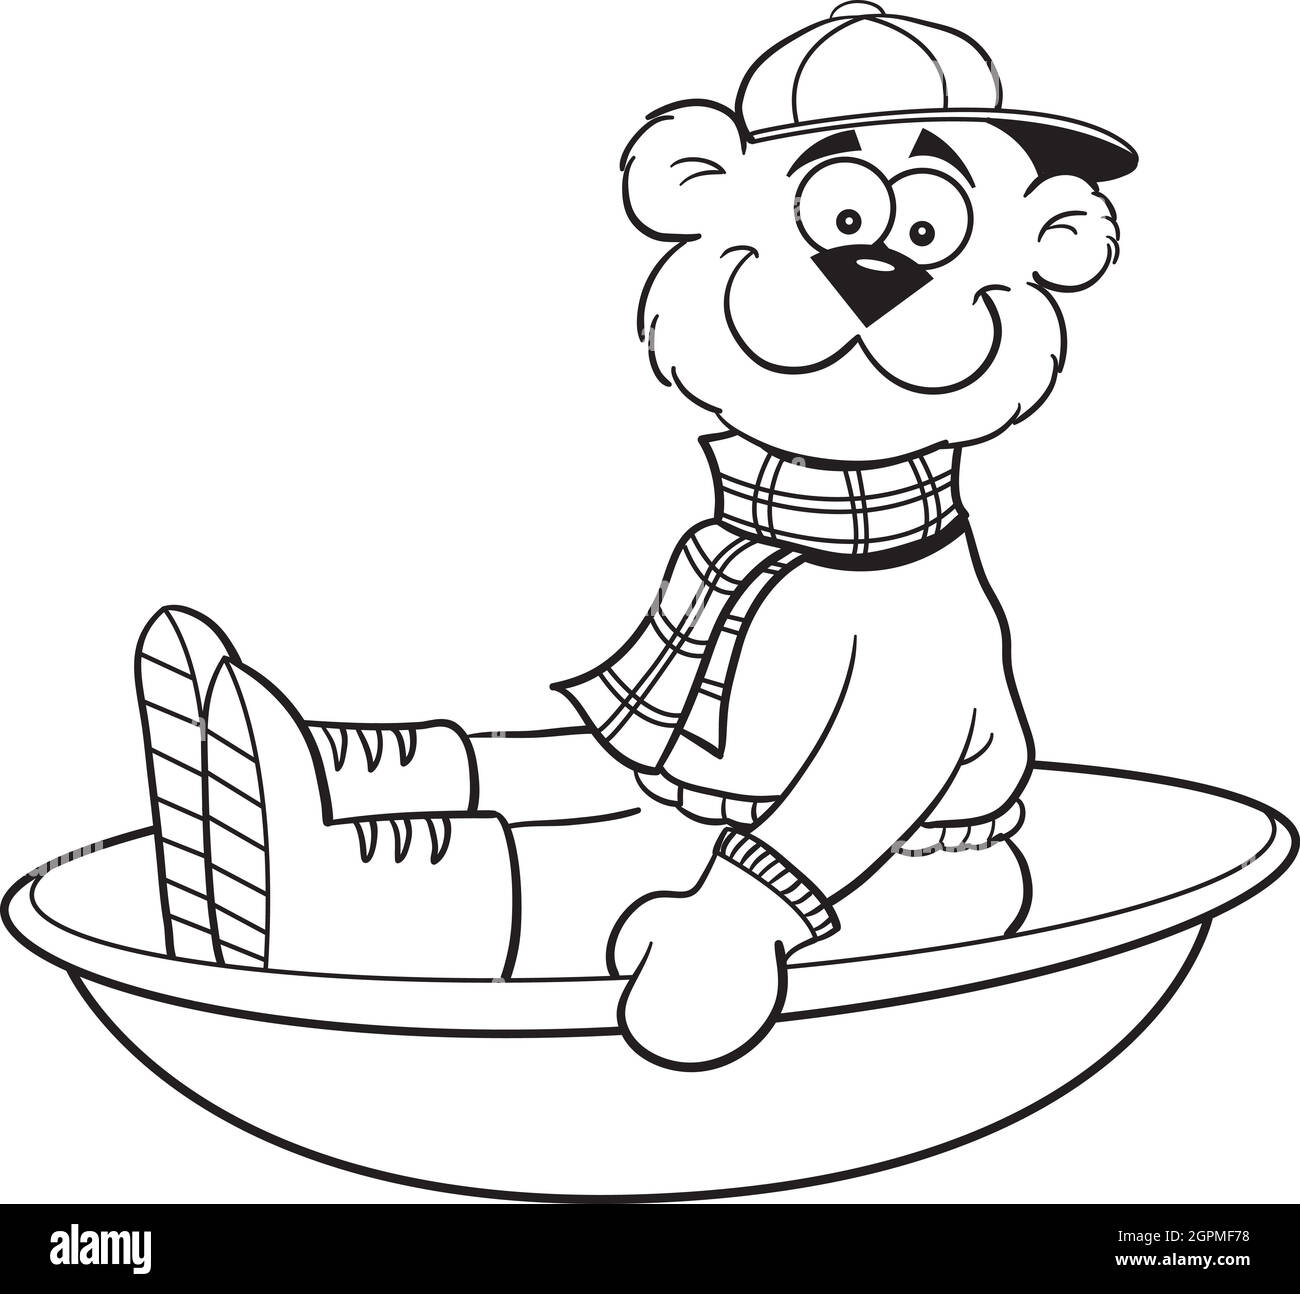 Black and white illustration of a bear sledding. Stock Vector